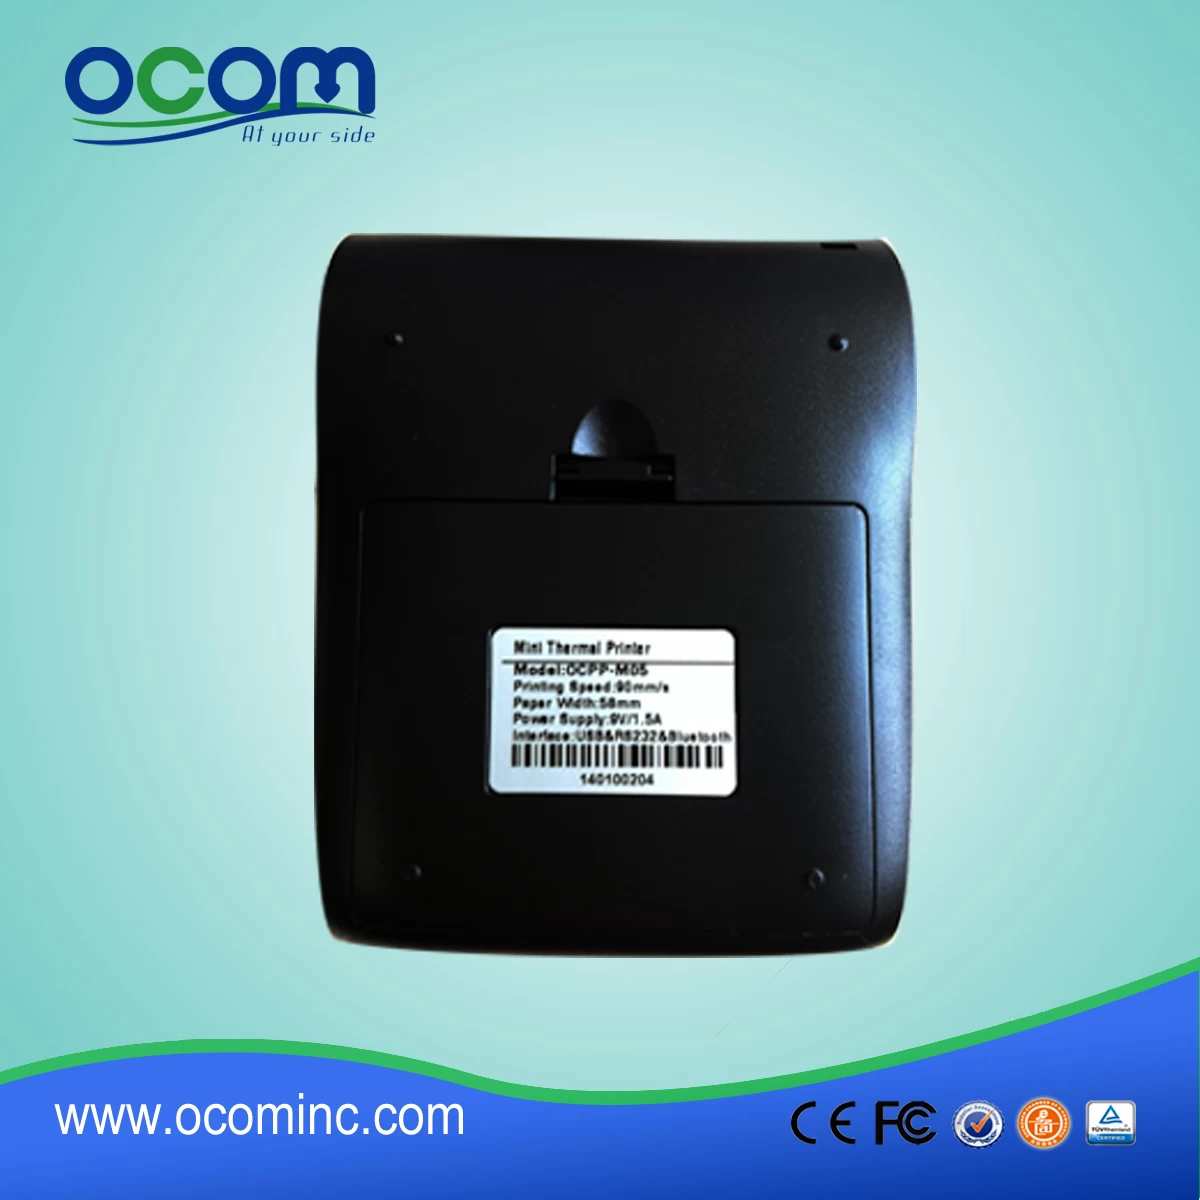 OCPP-M05: handheld bluetooth pocket printer, cheap thermal printer